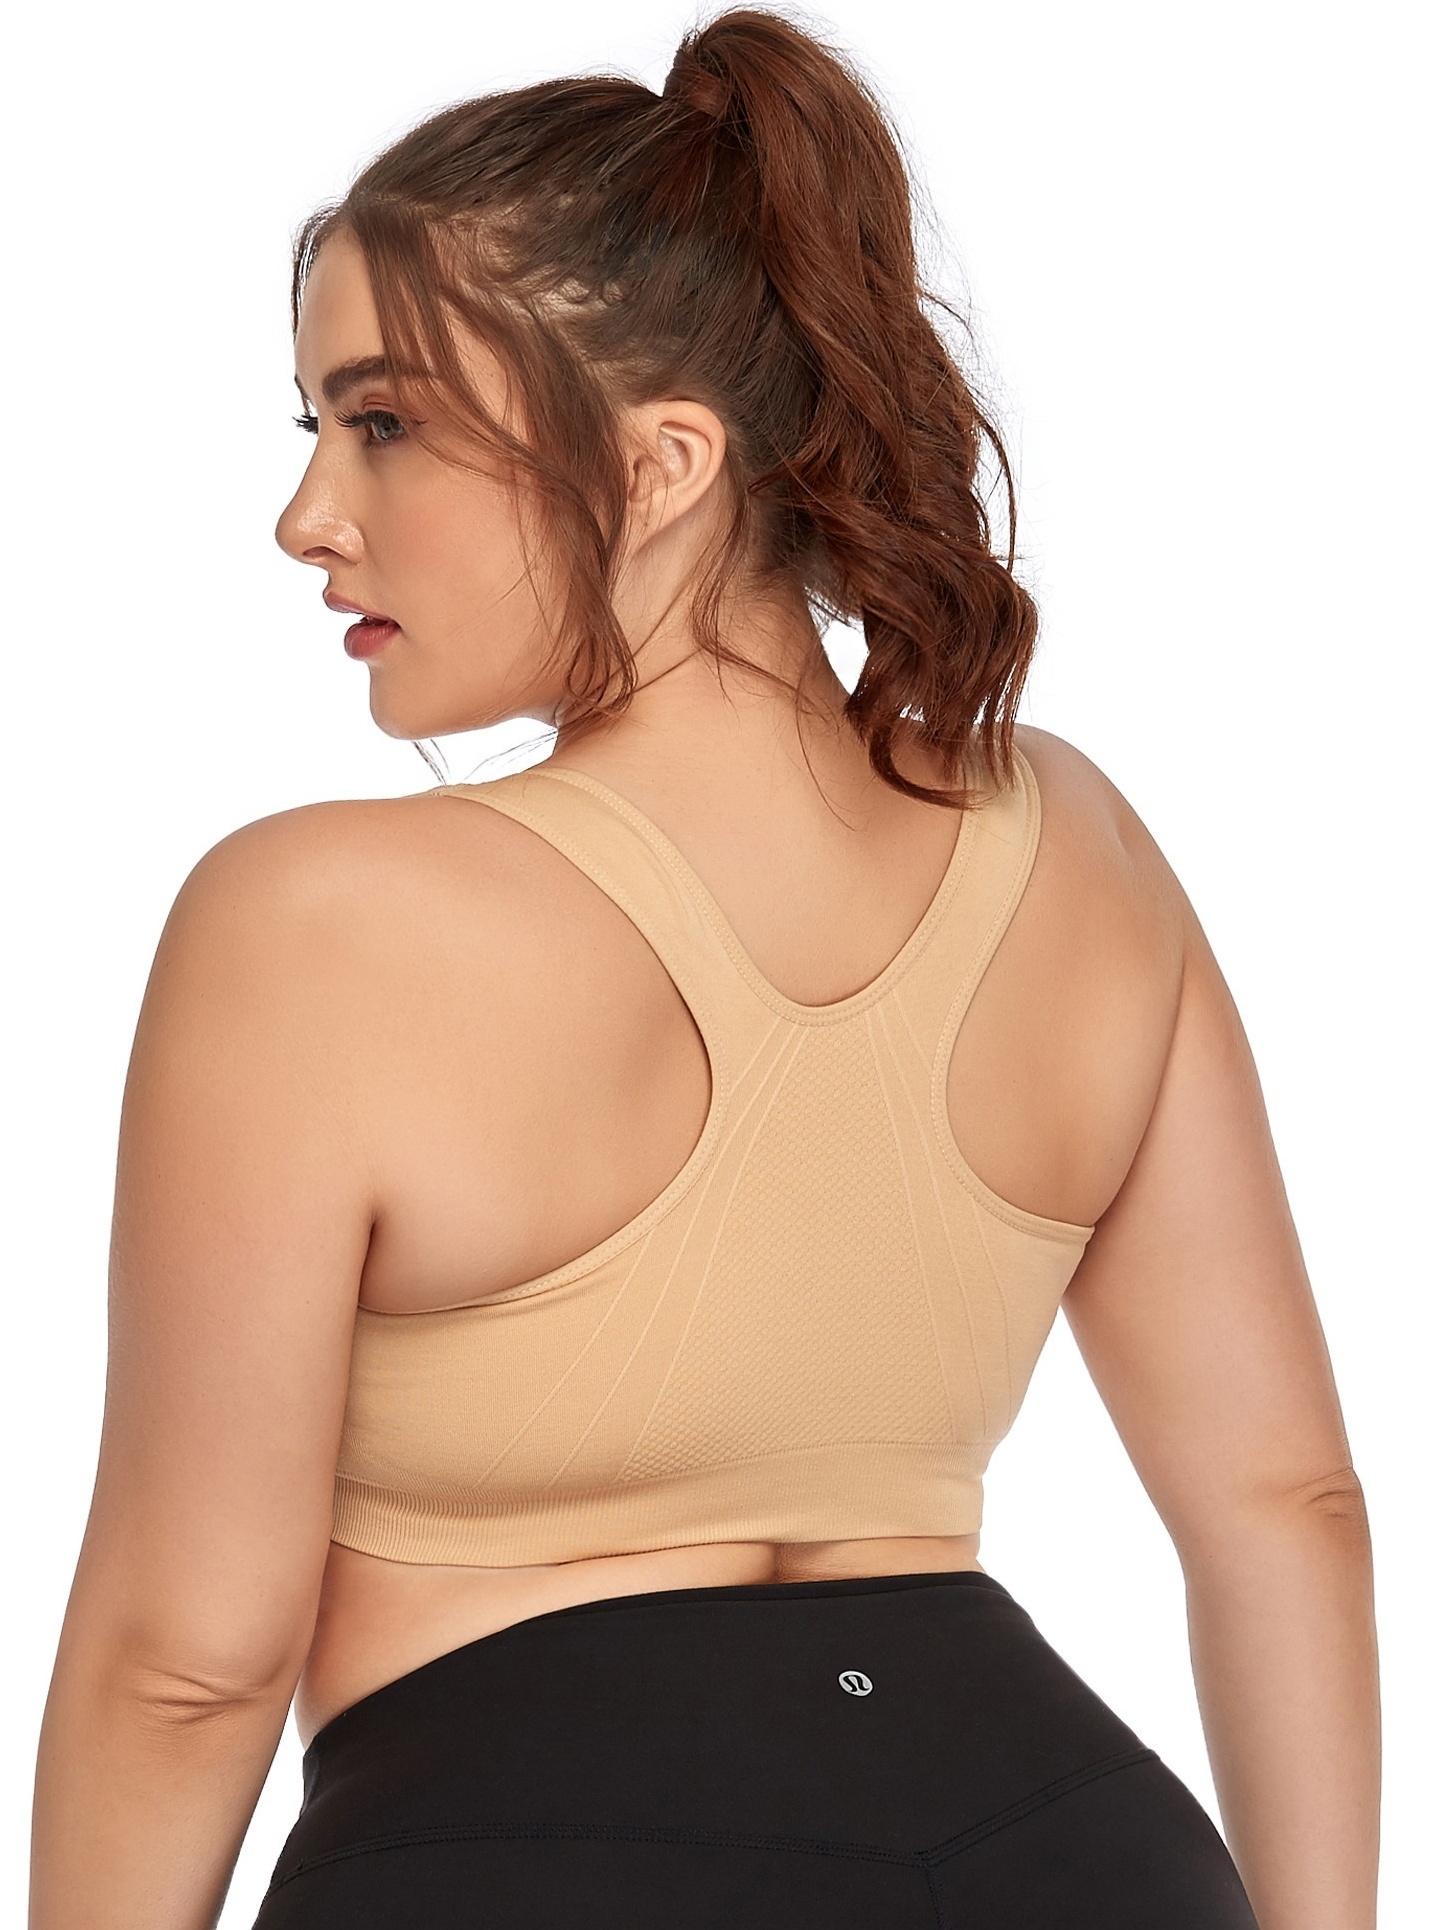 nsendm Female Underwear Adult Sports Bra with Padding Sports Bra No Wire  Comfort Sleep Bra Plus Size Workout Activity Bras Sports Bras Pack  for(Black